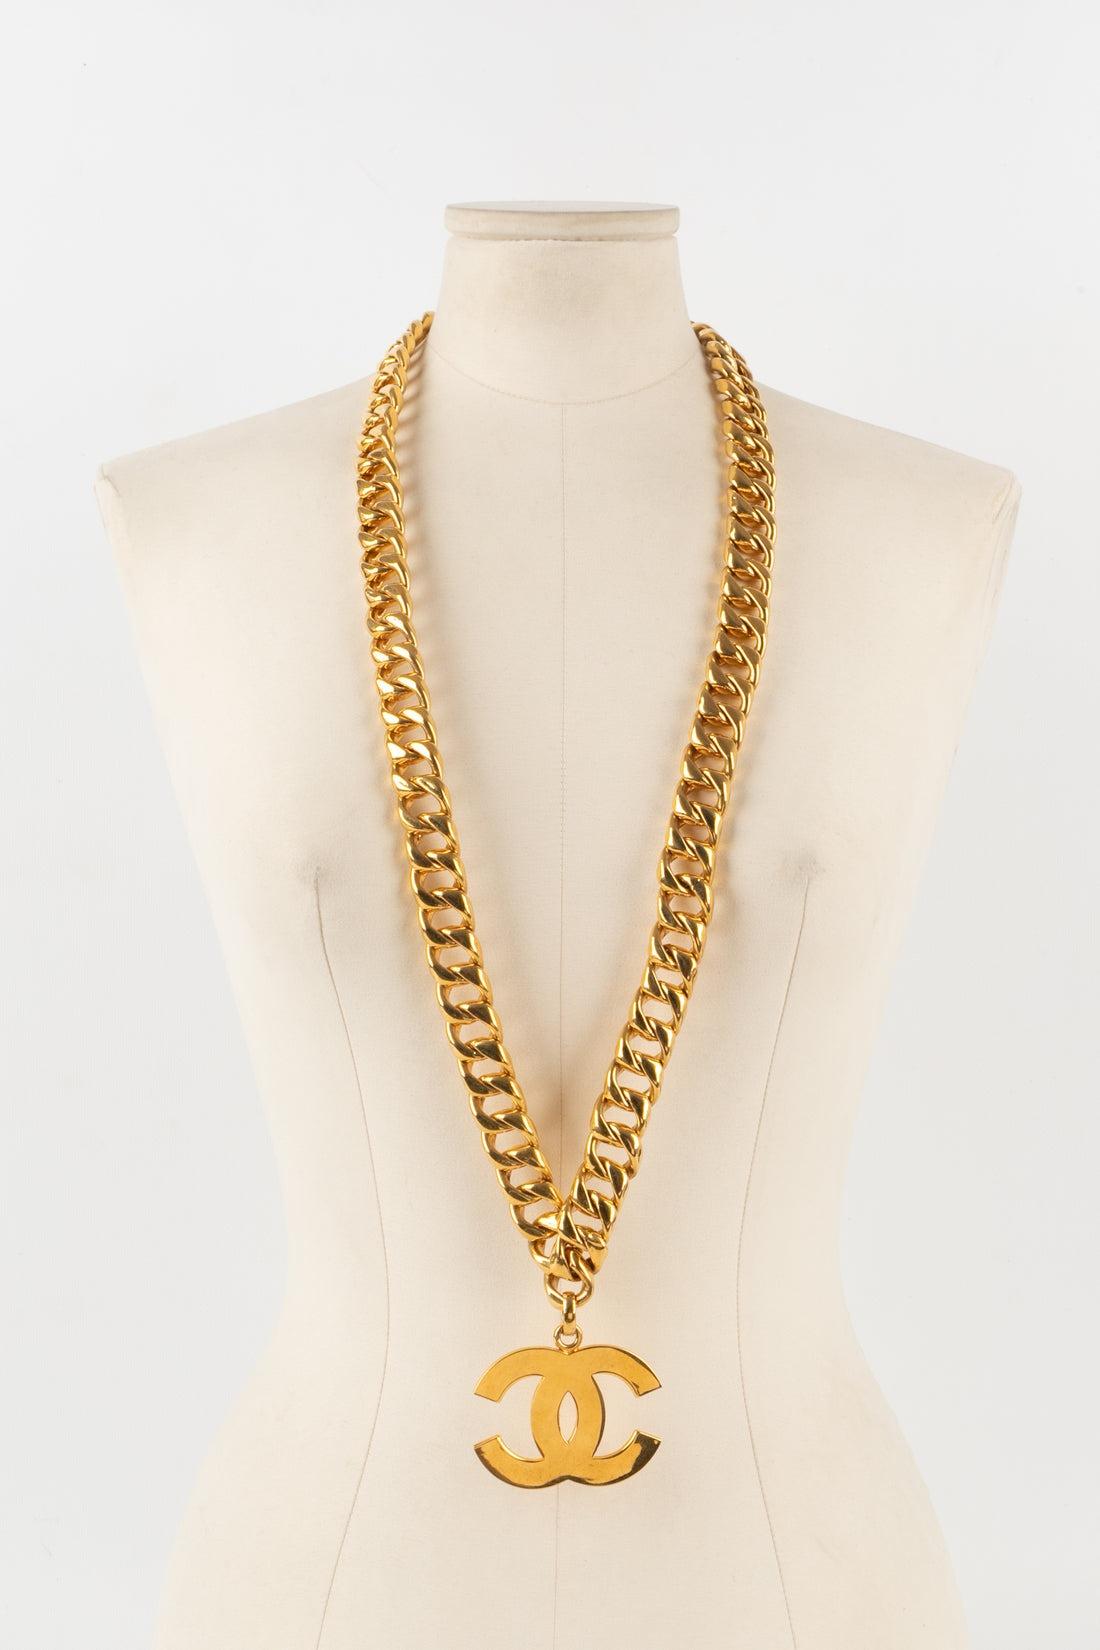 Chanel Golden Metal Necklace with CC Pendant, 1993 In Excellent Condition For Sale In SAINT-OUEN-SUR-SEINE, FR